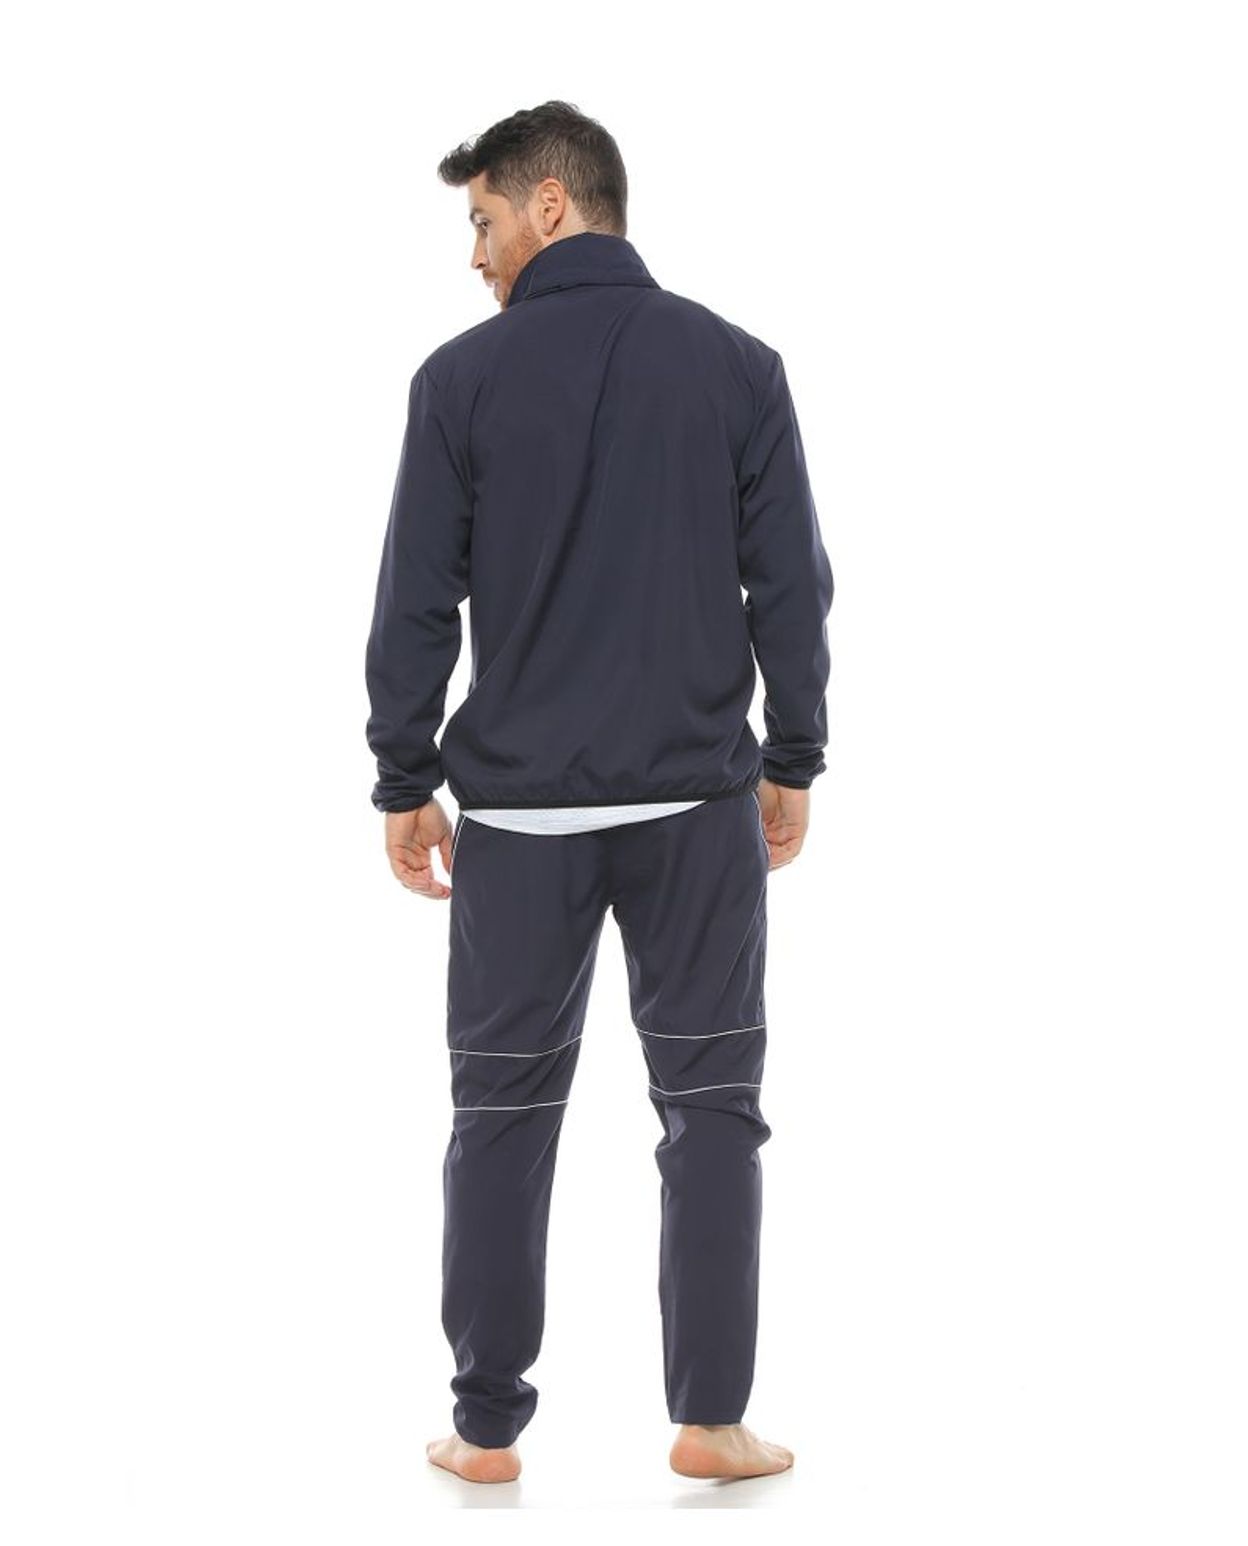 modelo-con-Pantalon-Deportivo-Azul-y-chauqueta-deportiva-Para-Hombre-parte-trasera